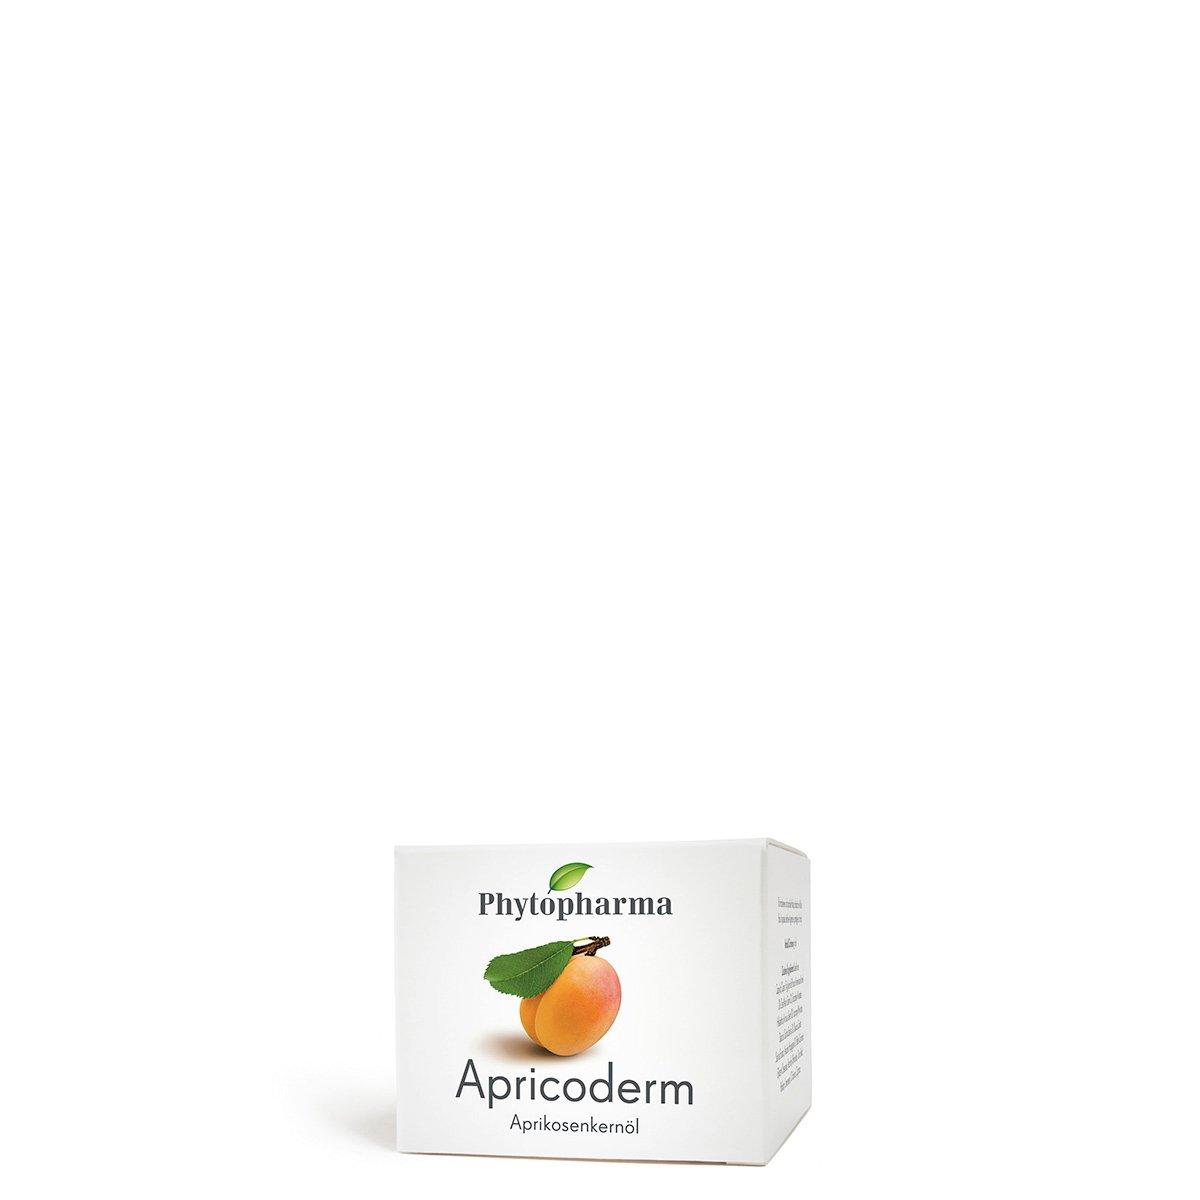 Phytopharma Apricoderm topf Apricoderm - Aprikosenkernöl 